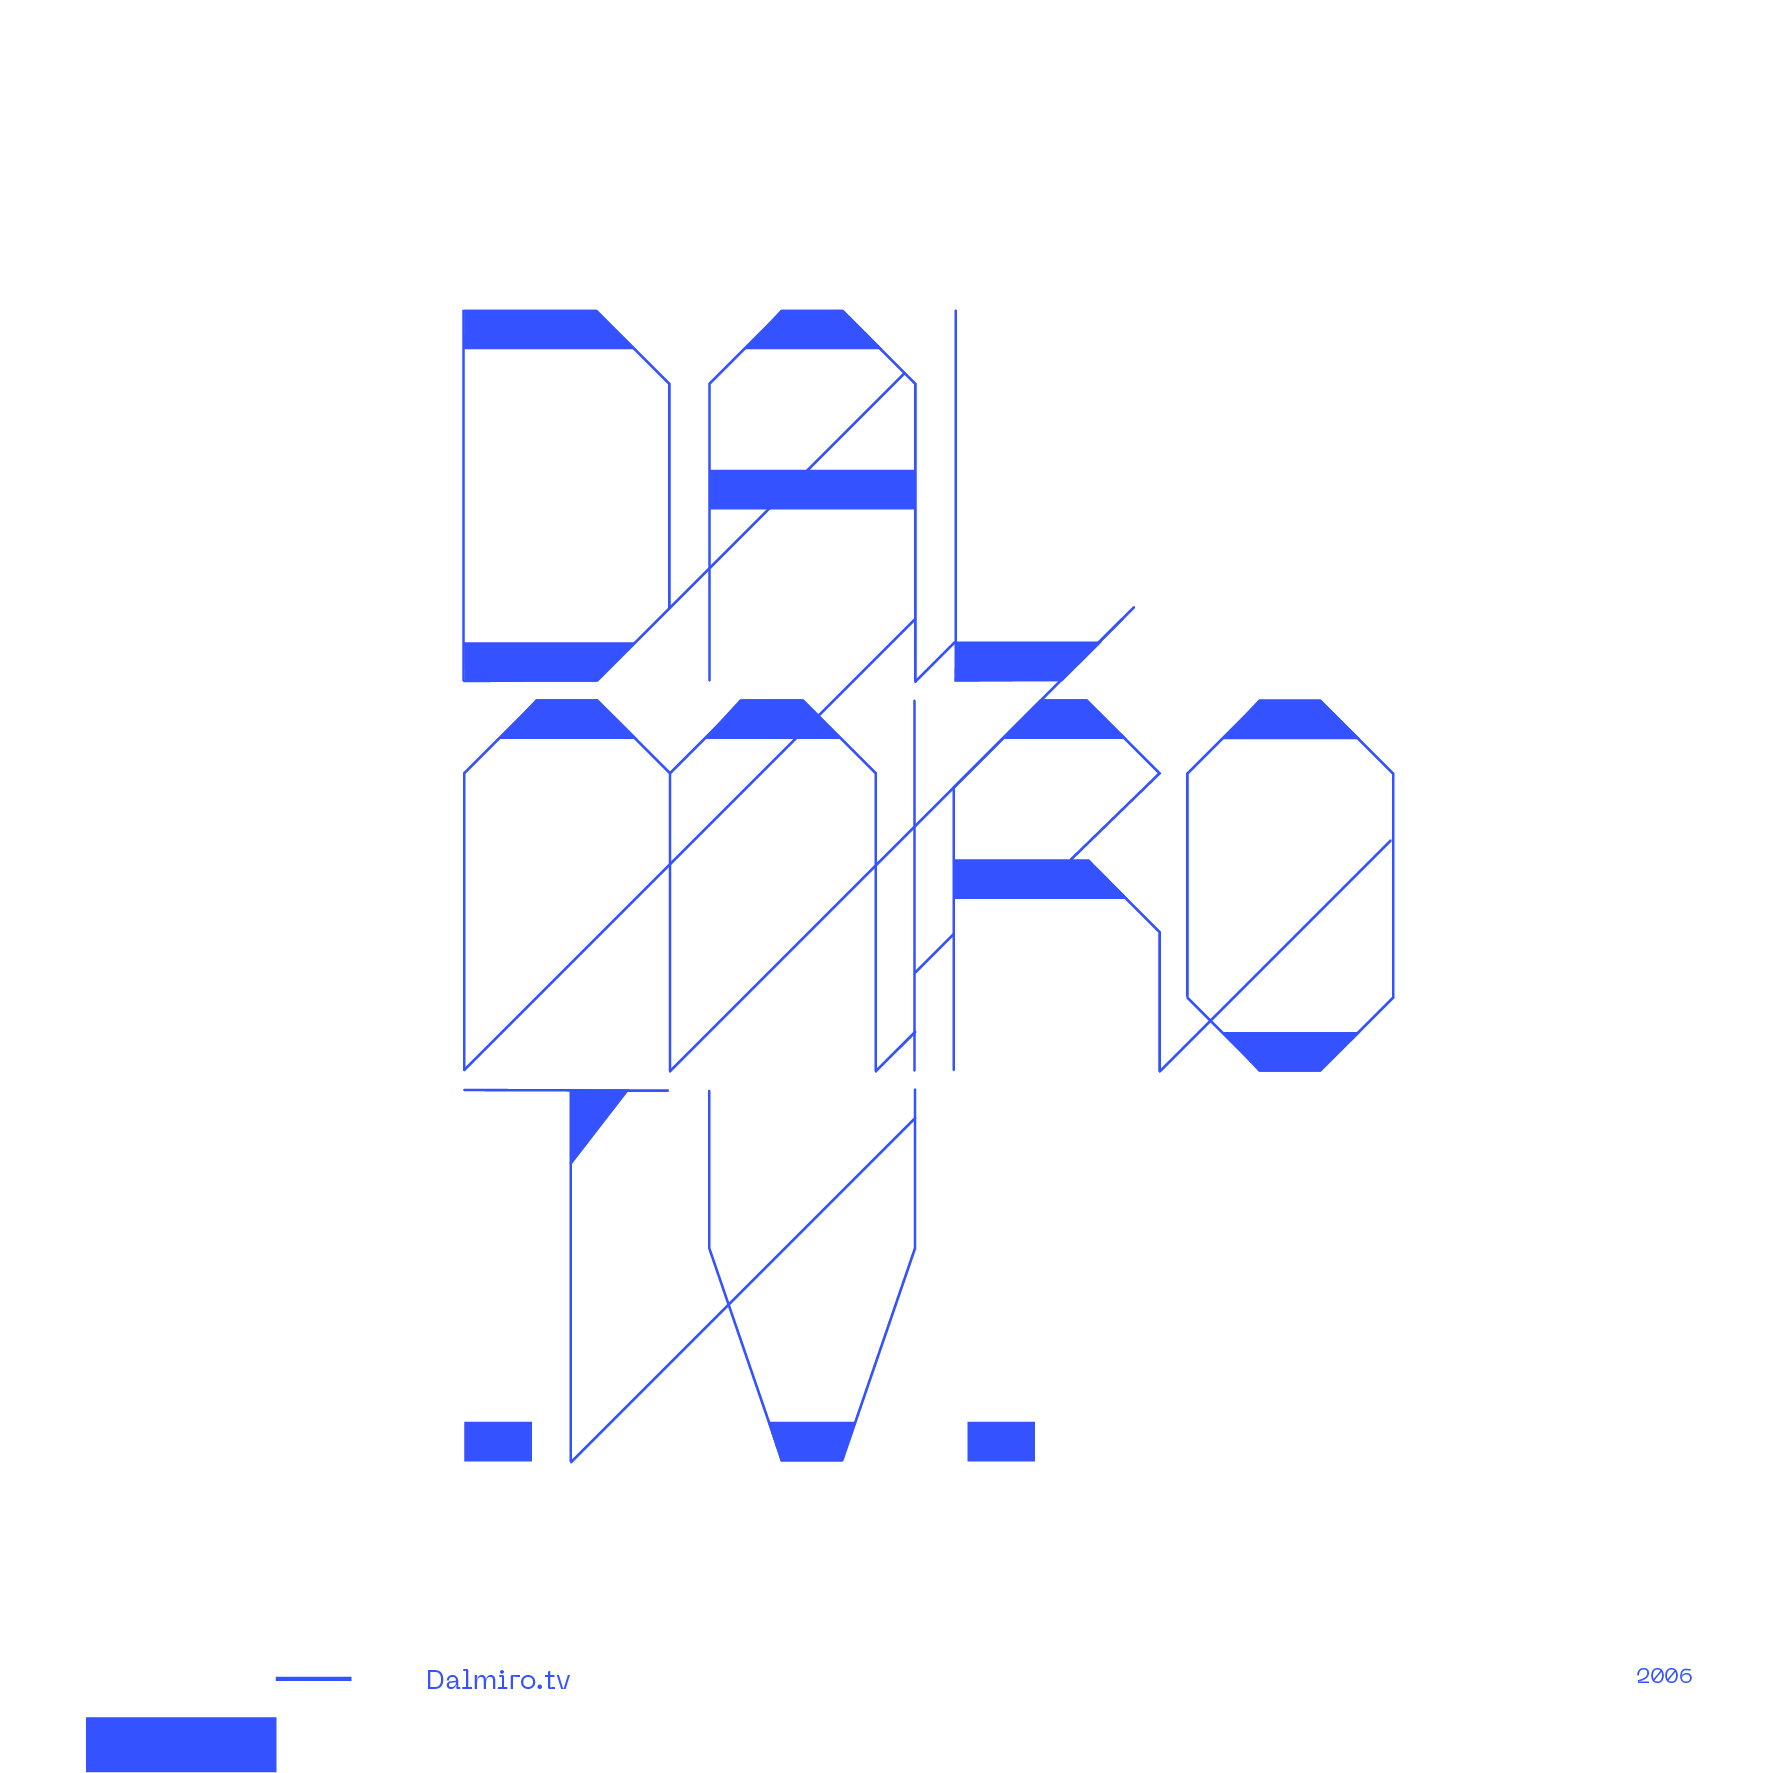 Guapo_Design_Studio_Logotype_Collection_Dalmiro-1